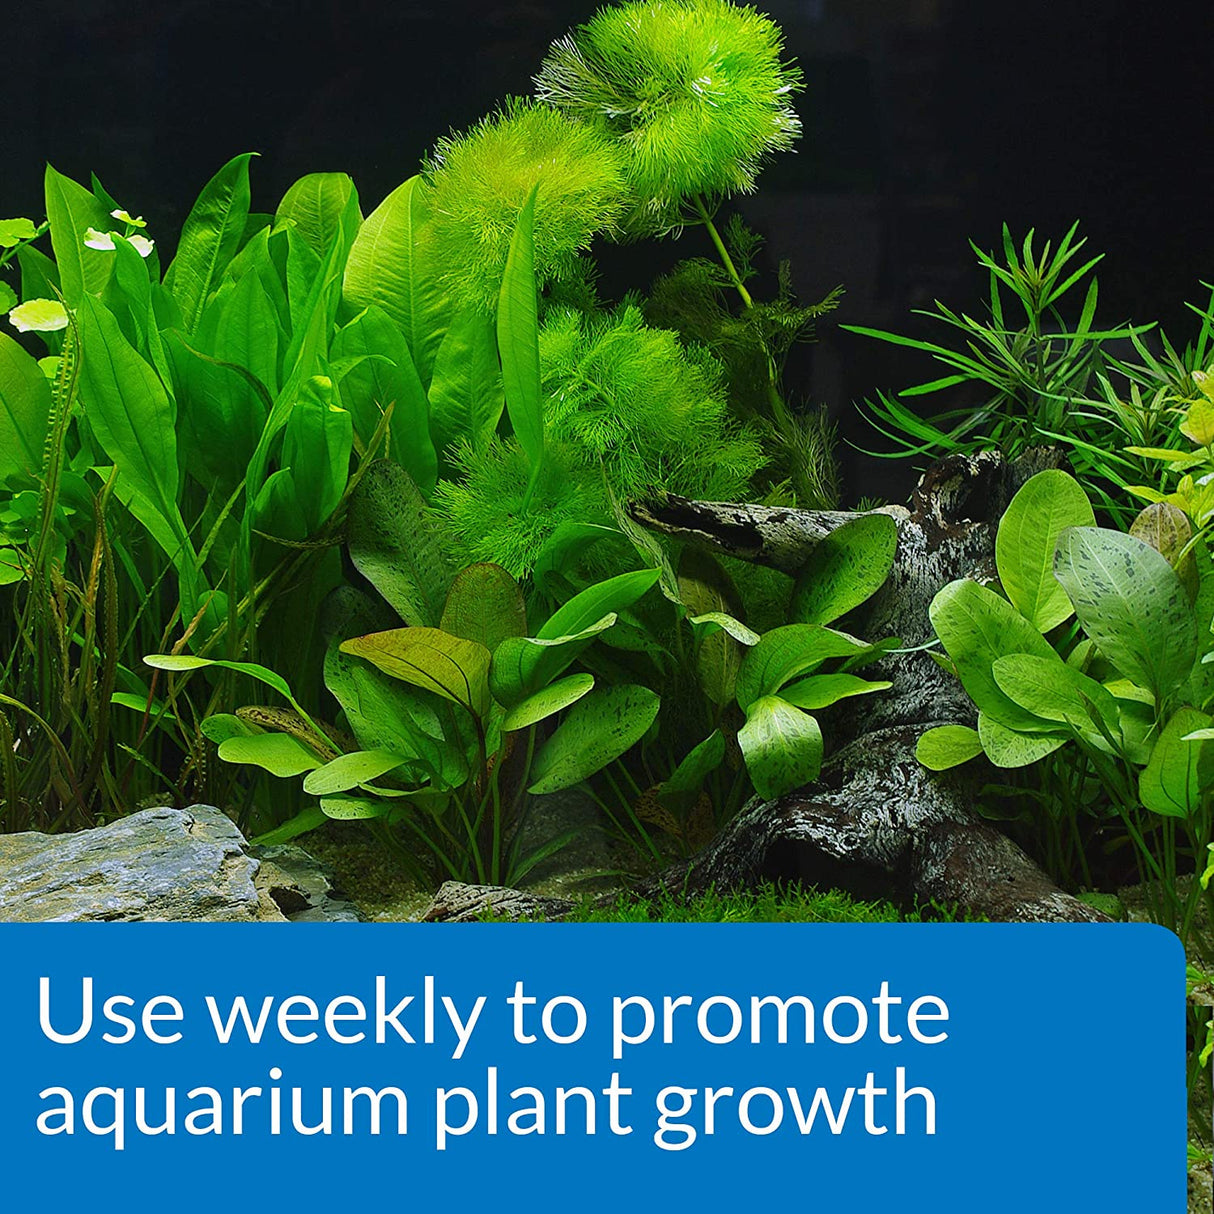 18 oz API Leaf Zone Promotes Aquarium Plant Growth